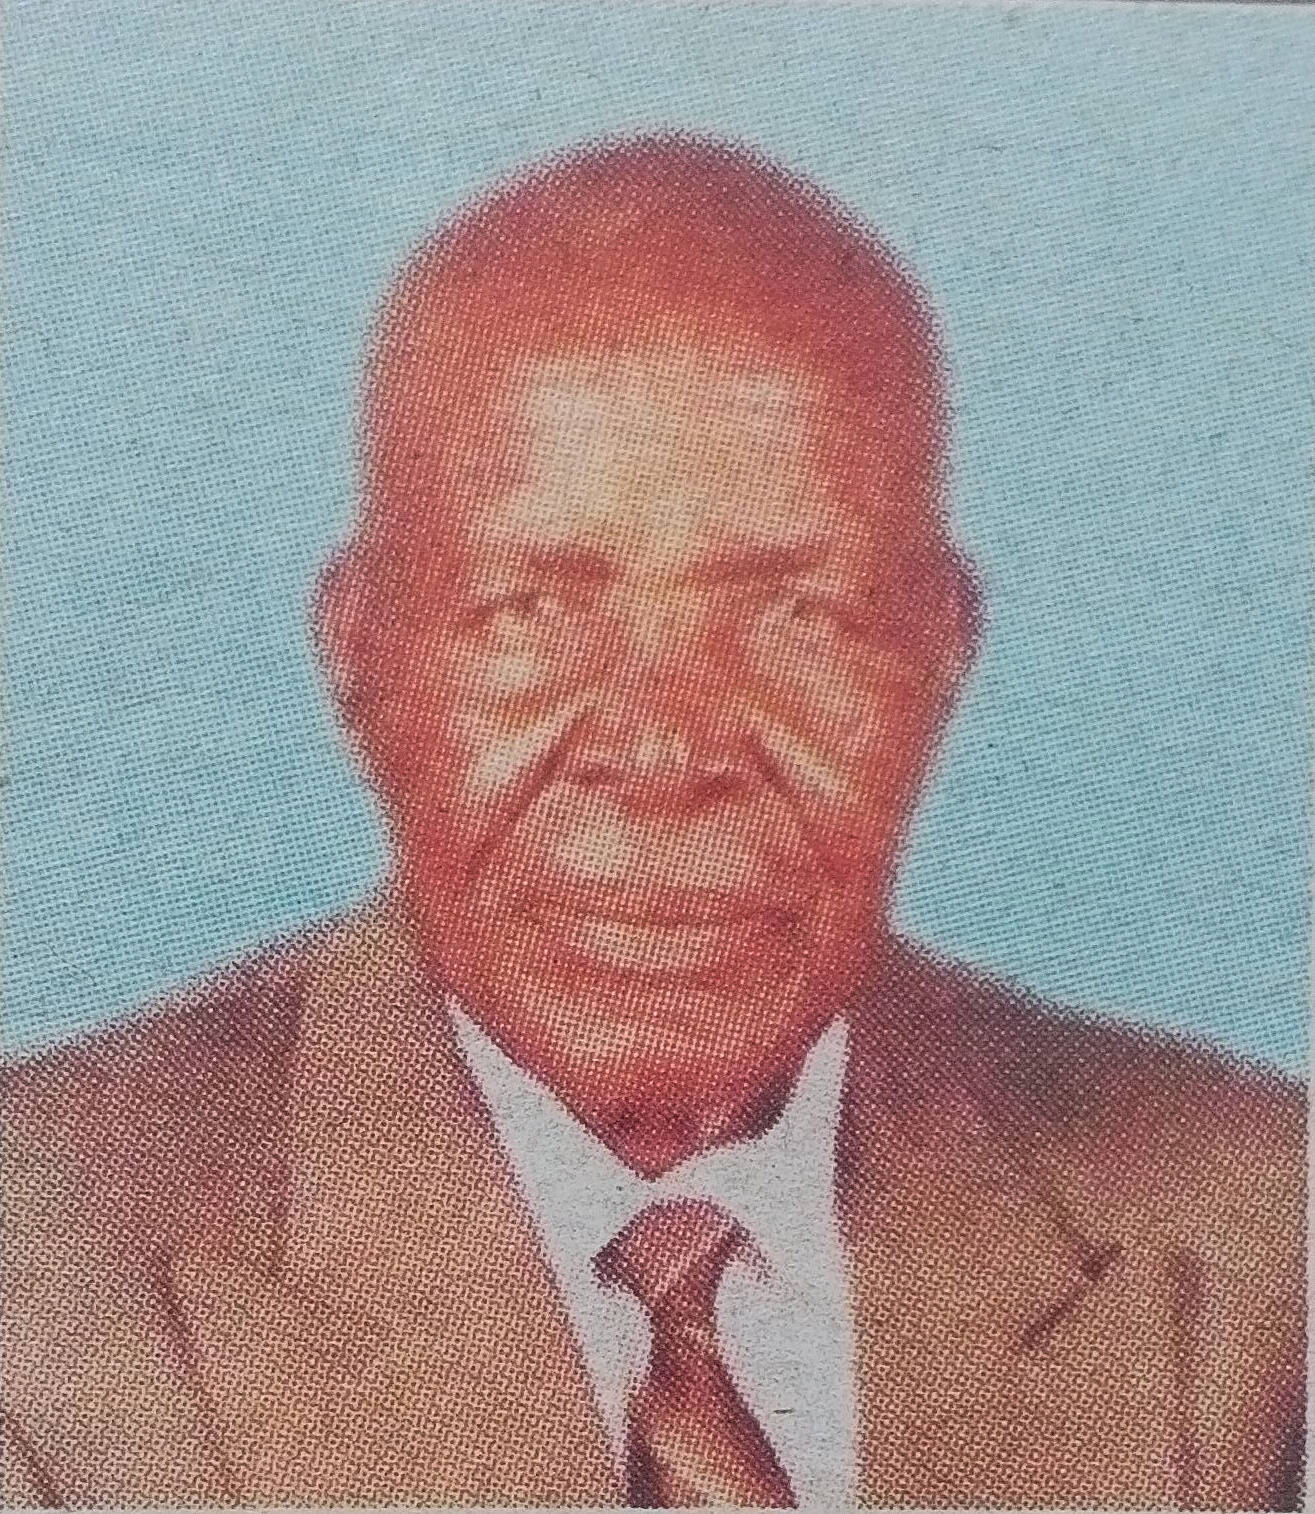 Obituary Image of Mzee San Riechi Nya 1920 - 2017